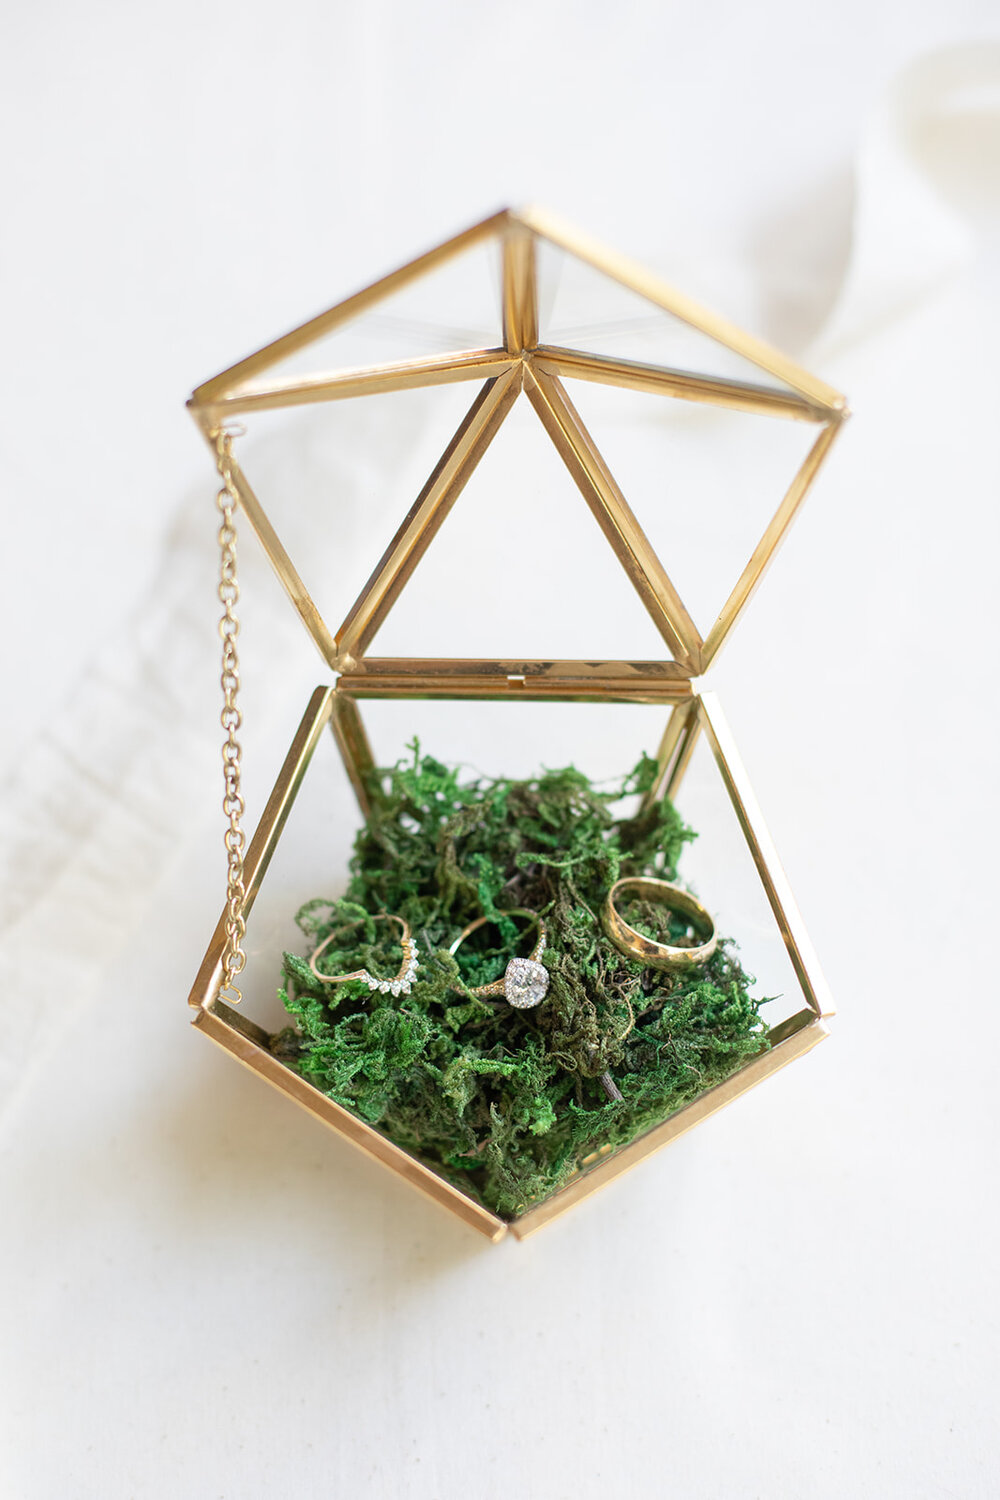  Mossy, gold, geometric ring box. 